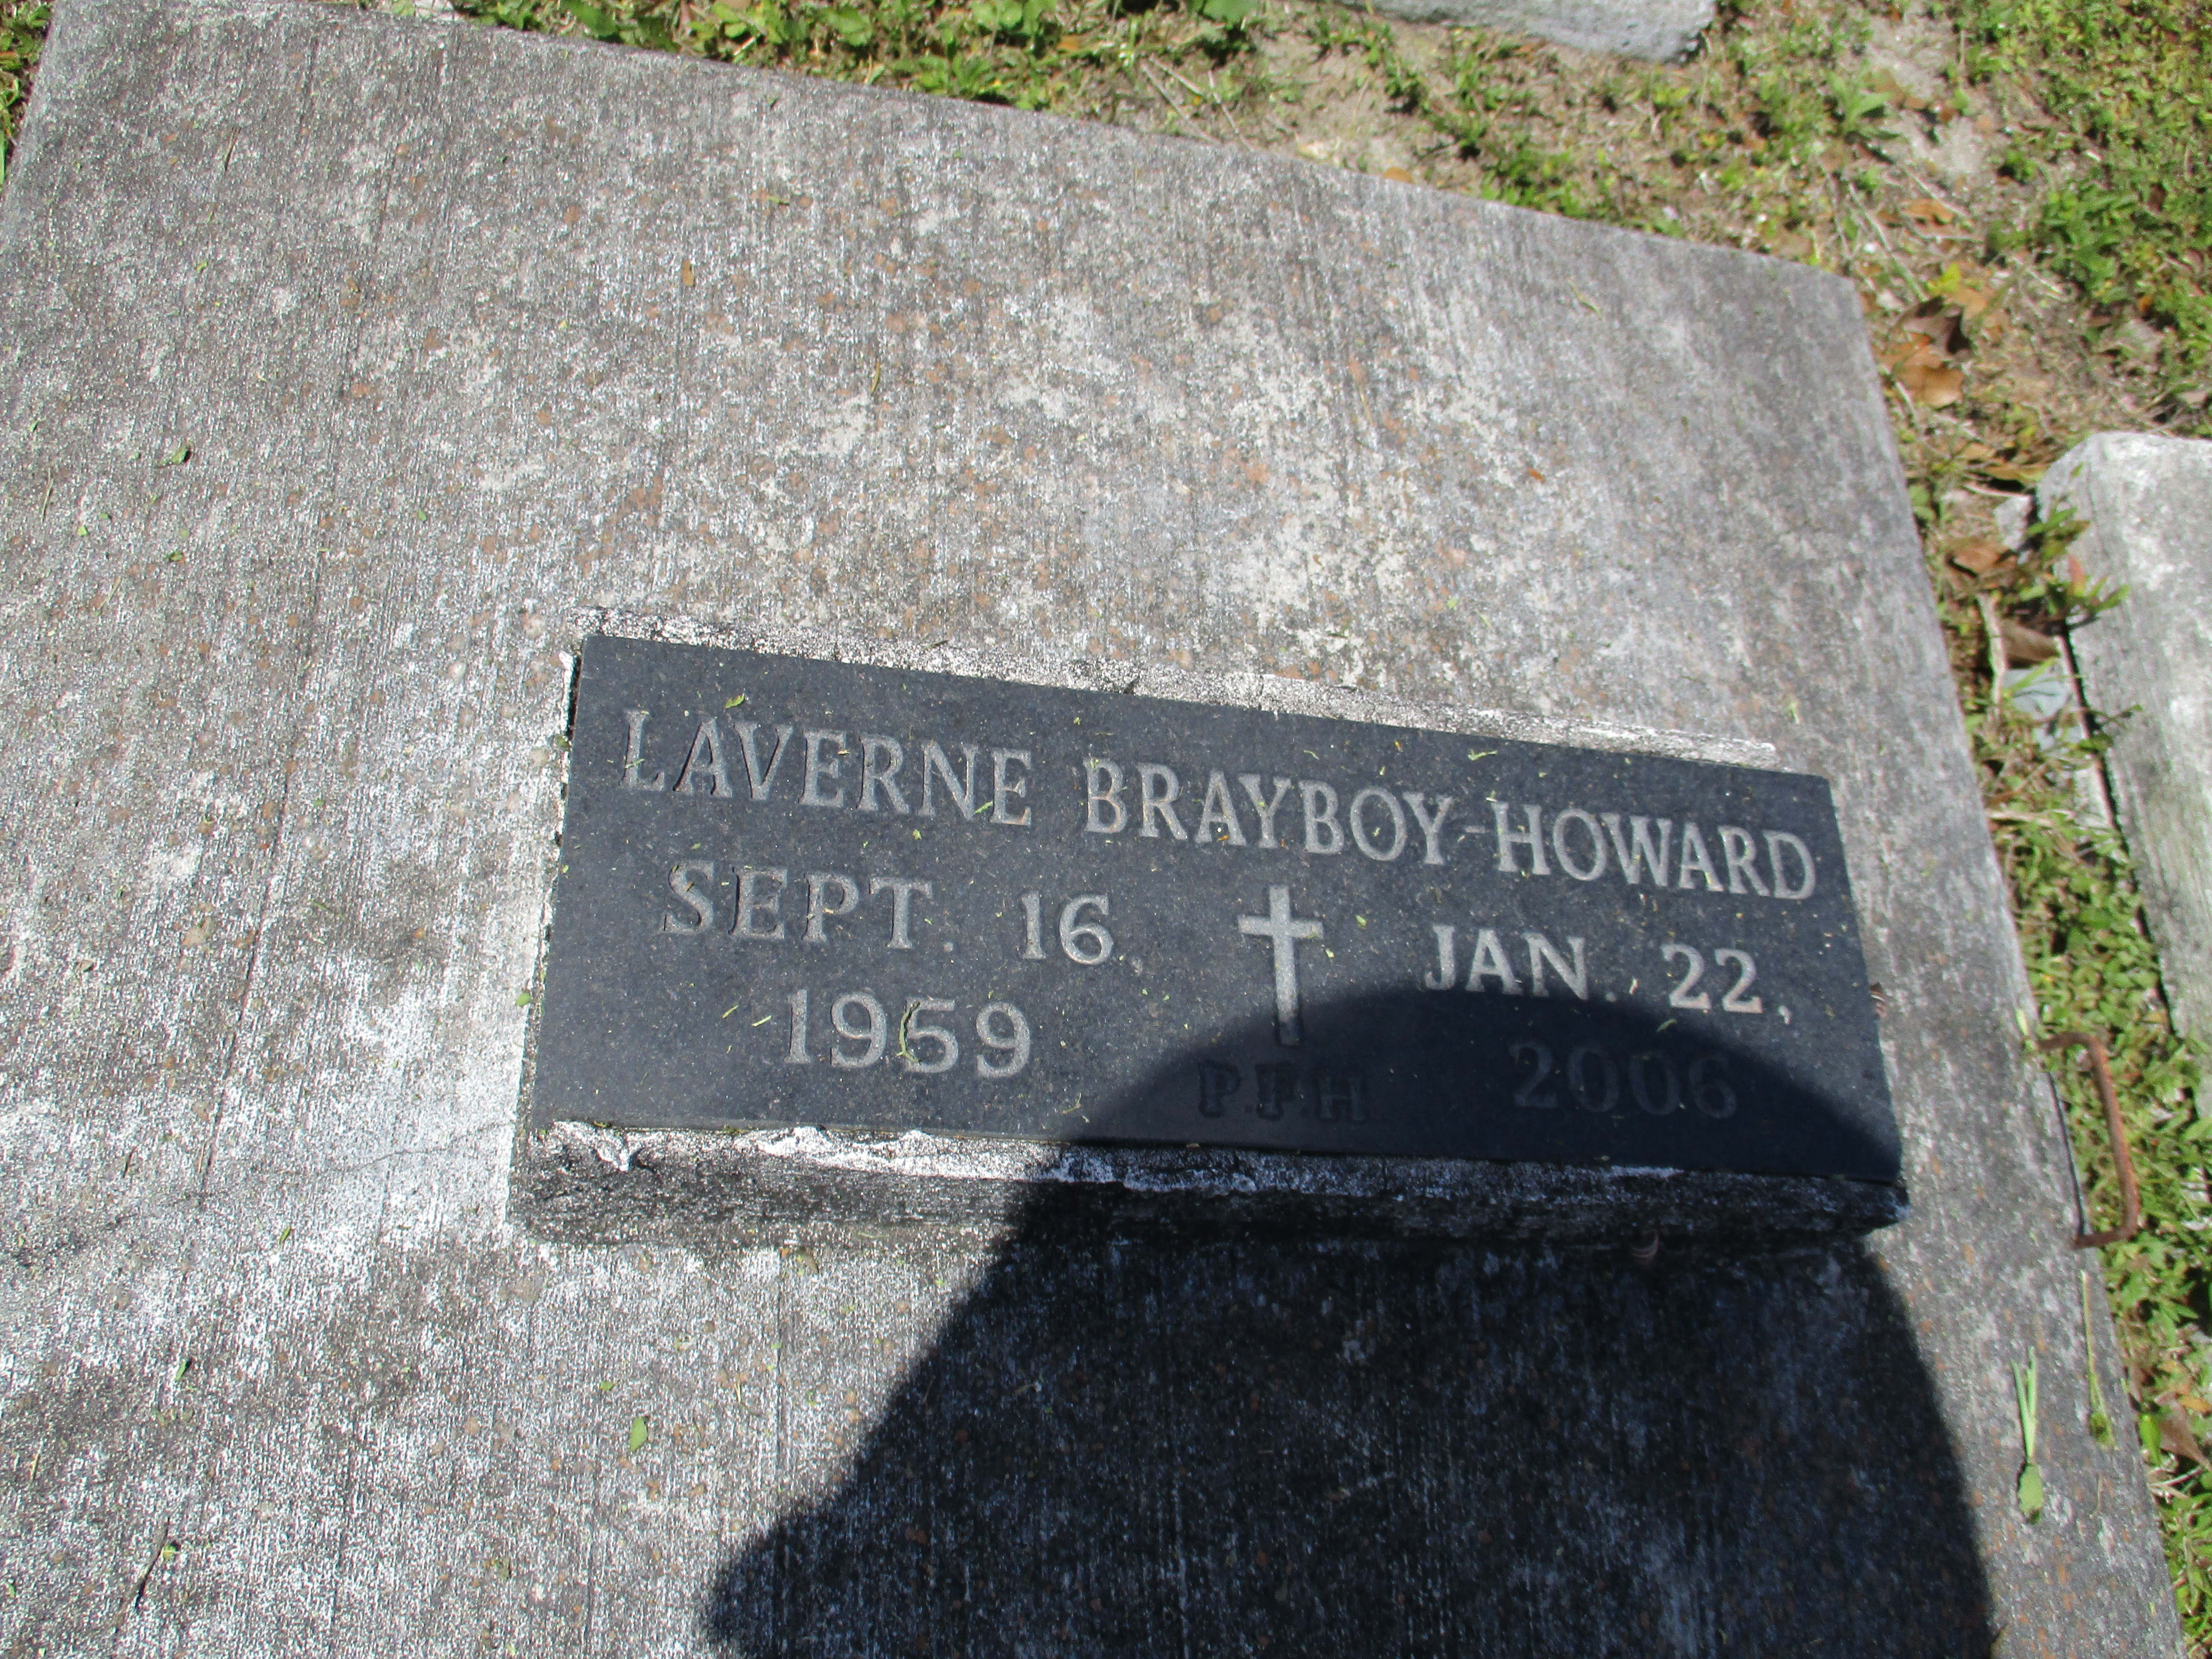 Laverne Brayboy-Howard